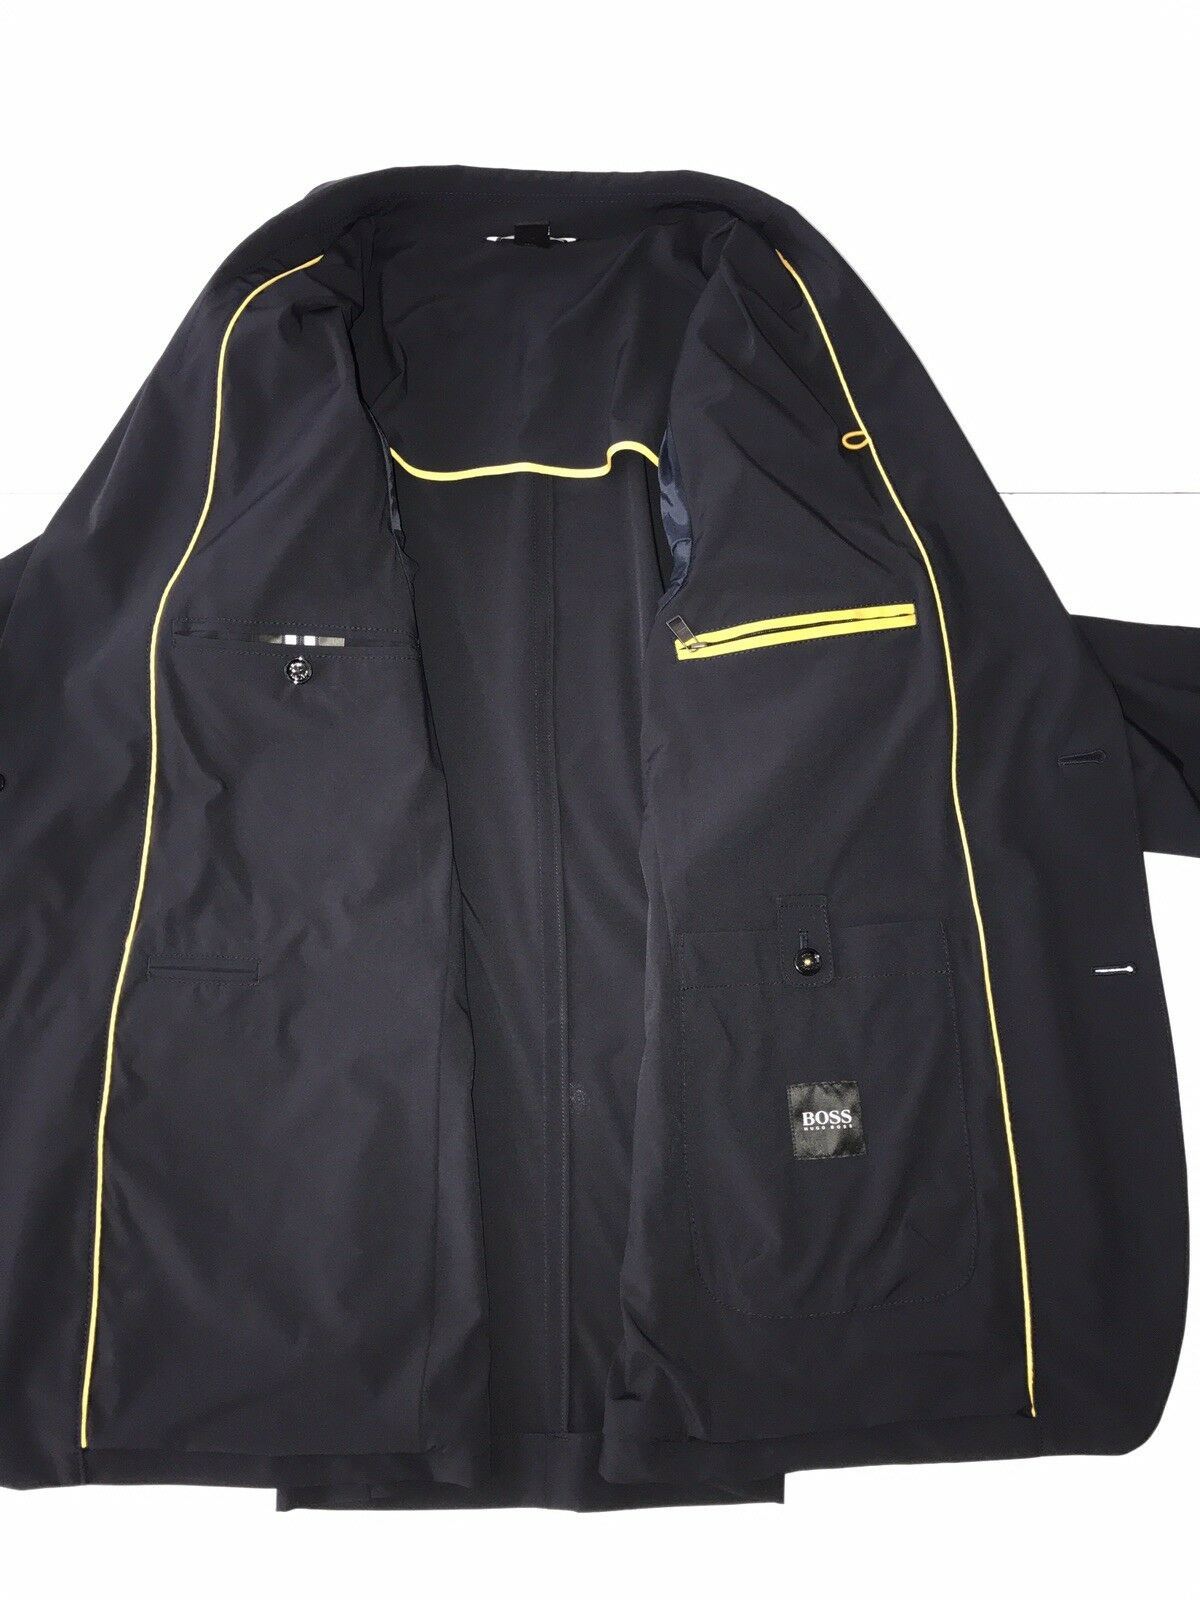 NWT $745 Boss Hugo Boss Neilton Stretch Water Repellent Men's Sport Coat 40R US